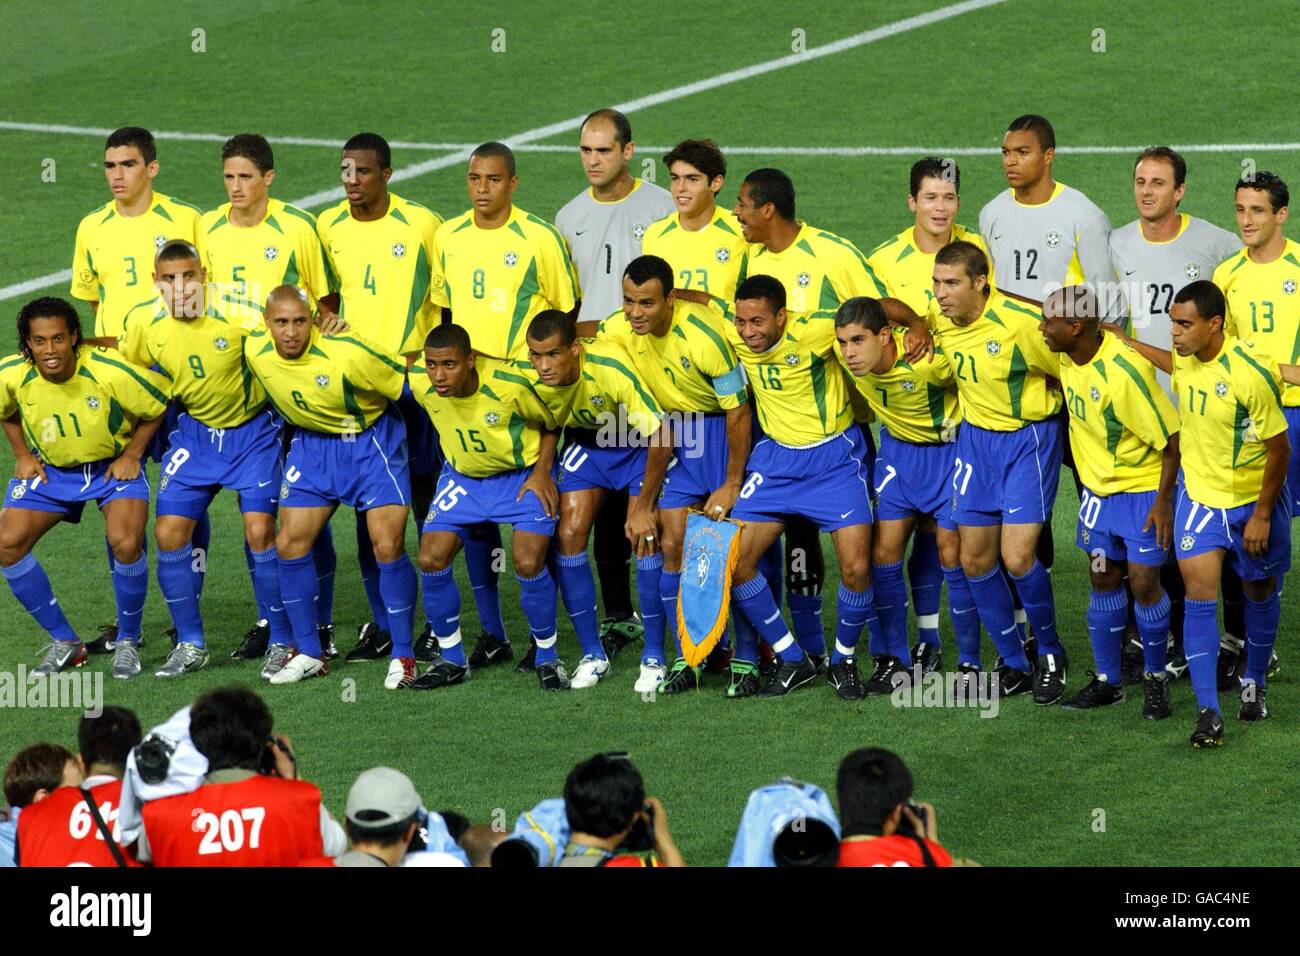 Fussball Fifa World Cup 02 Finale Deutschland Brasilien Stockfotografie Alamy